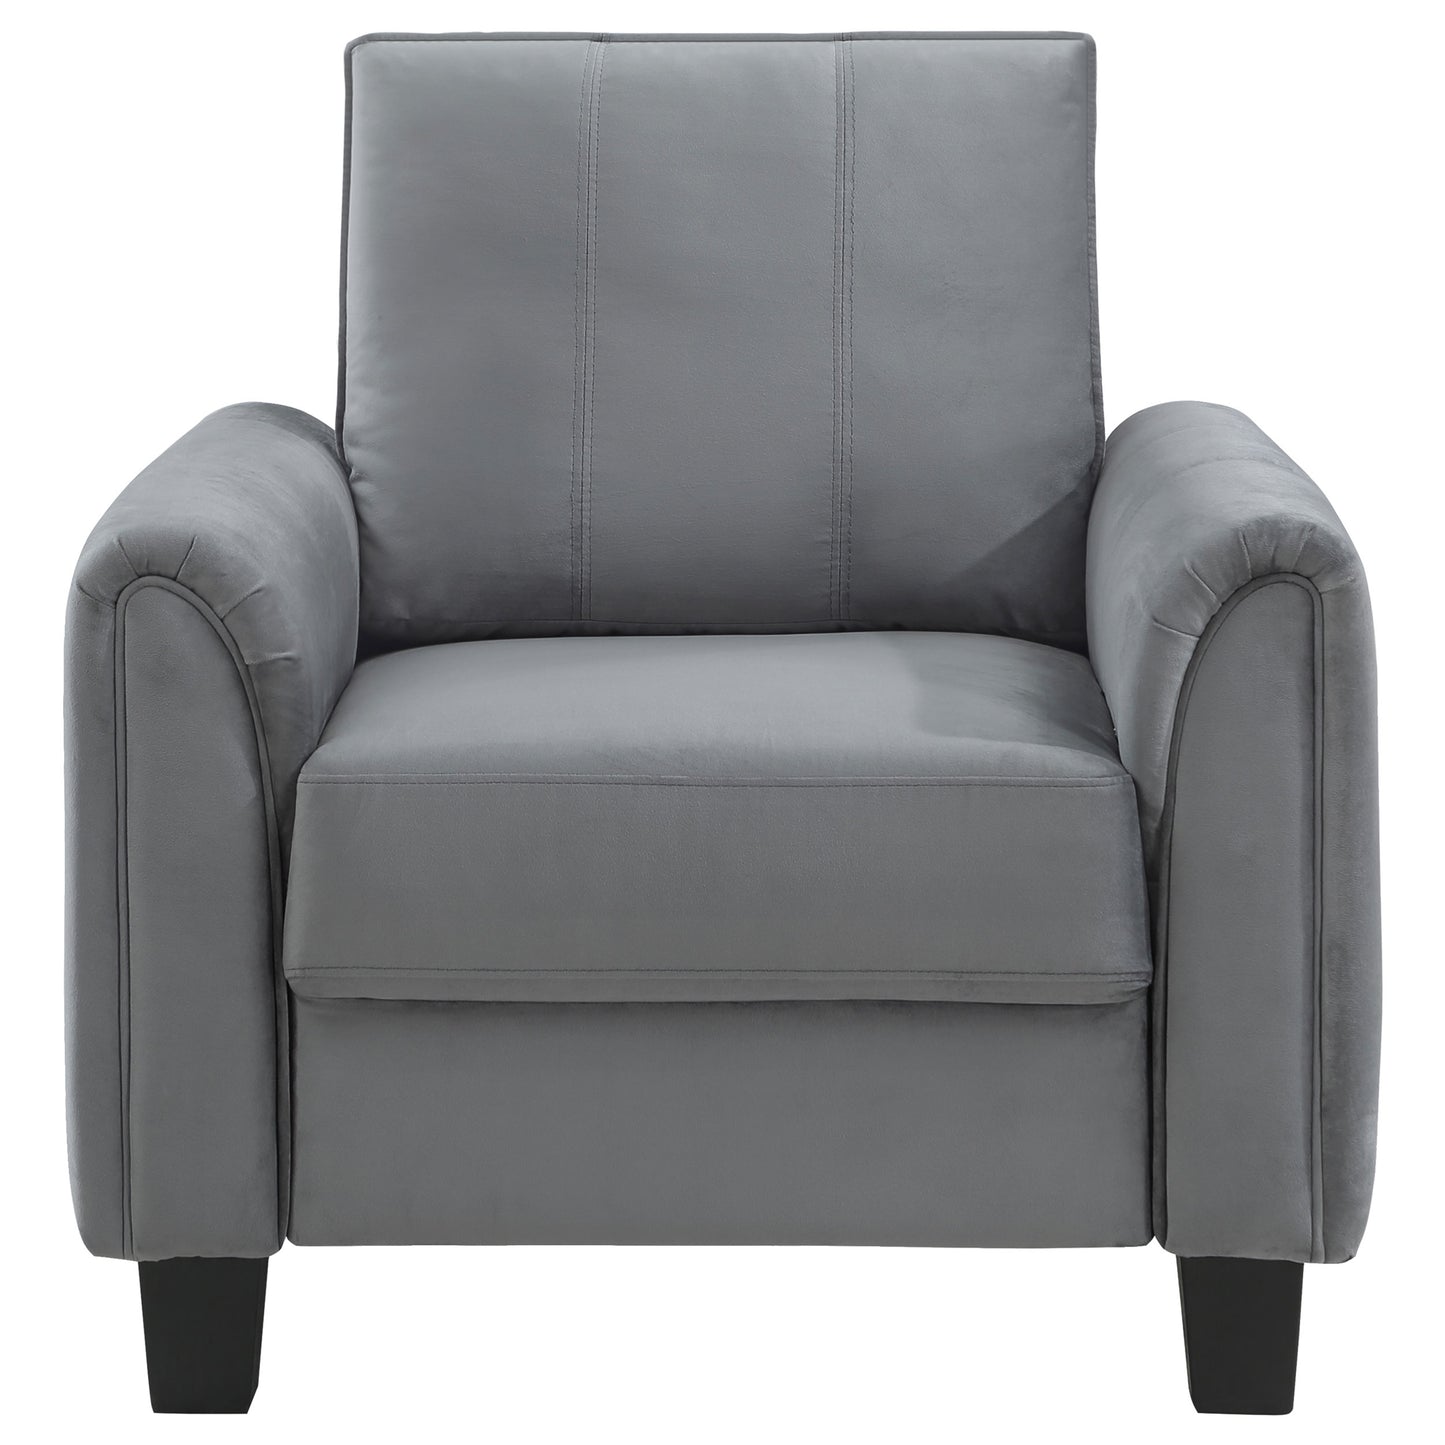 Davis  3-piece Upholstered Rolled Arm Sofa Grey